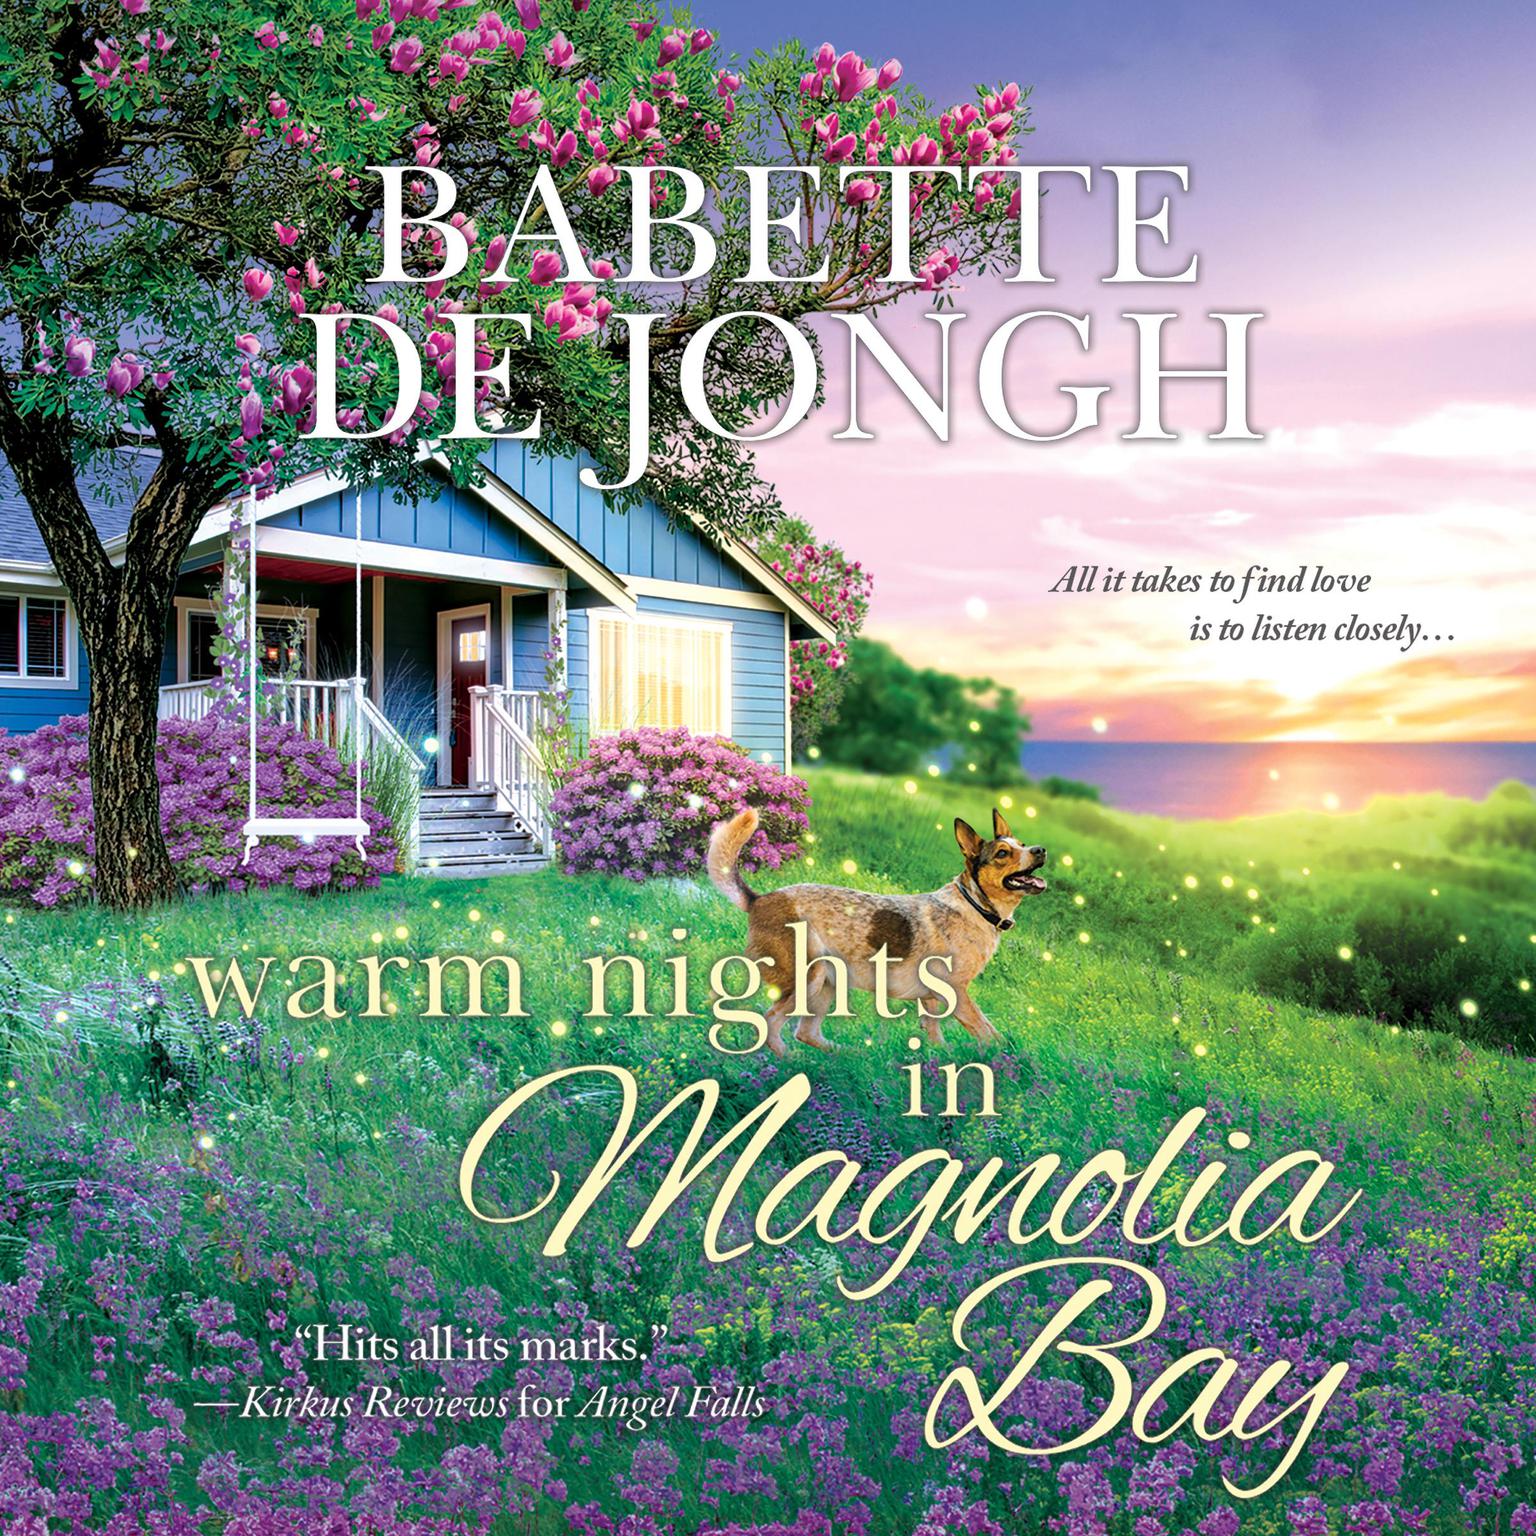 Warm Nights in Magnolia Bay Audiobook, by Babette de Jongh